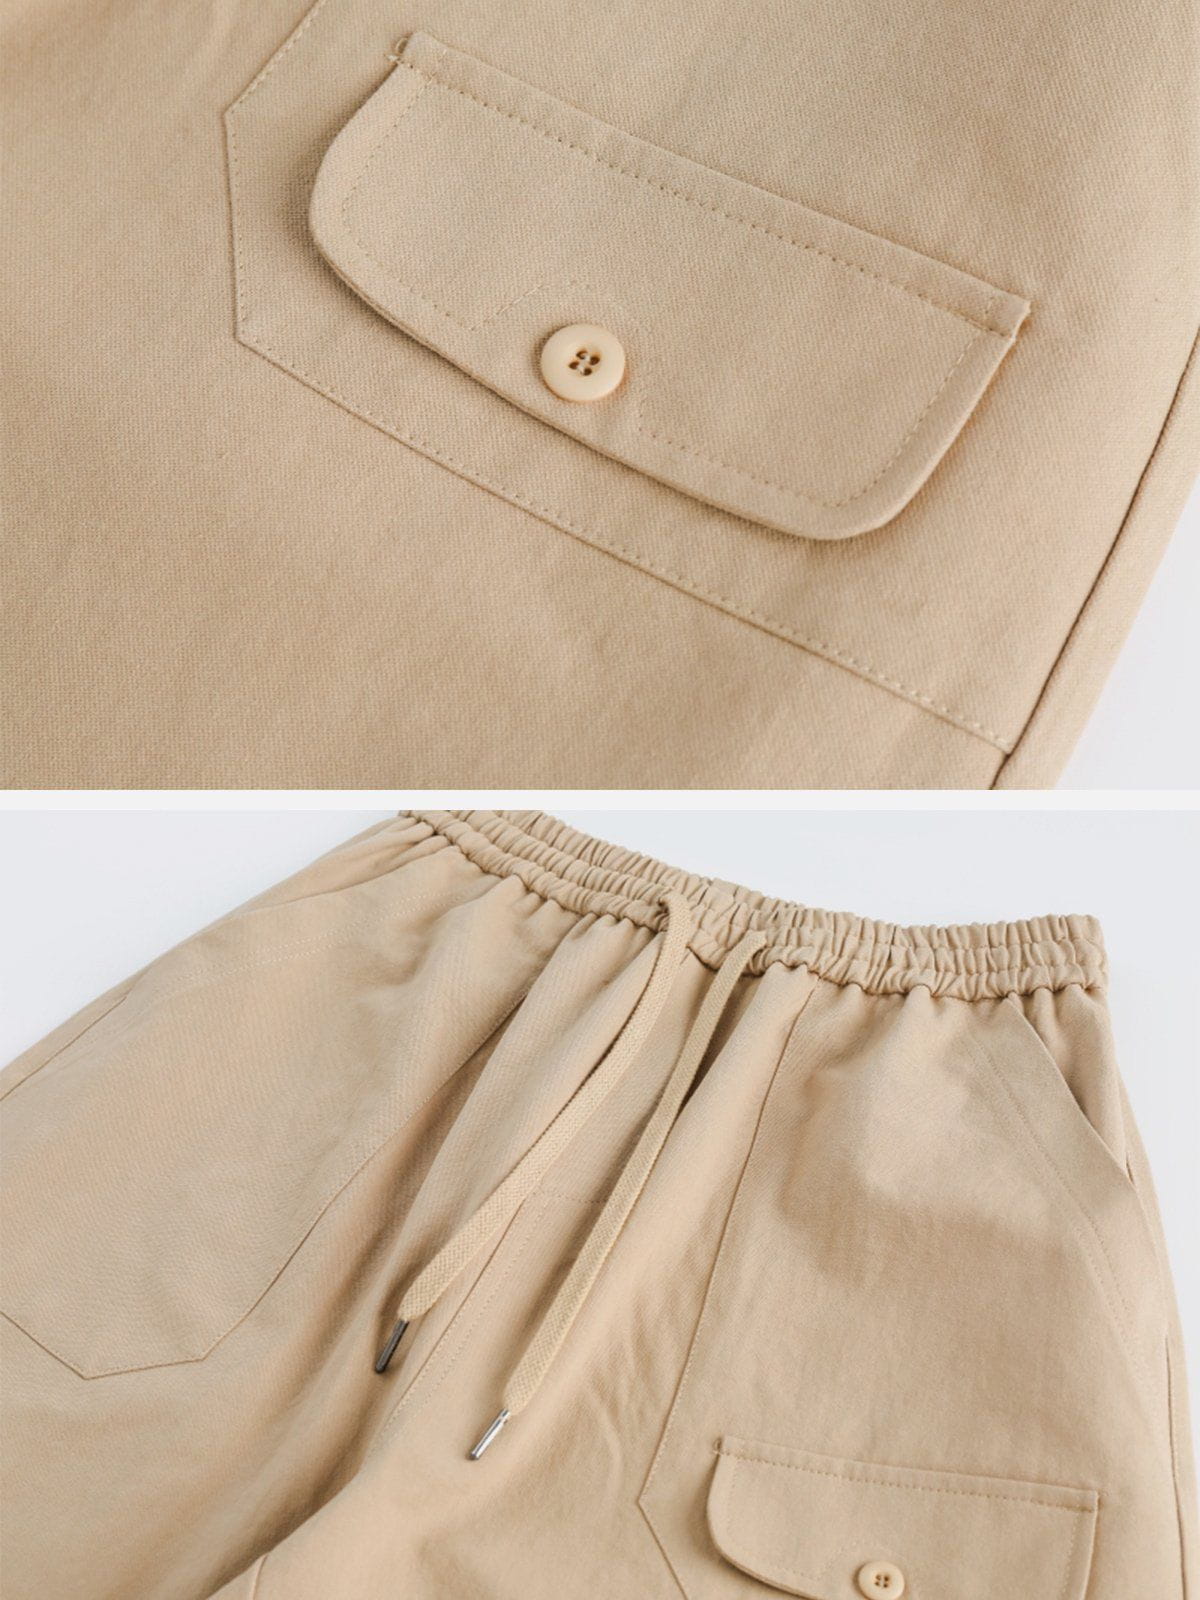 Sneakerland® - Irregular Pocket Design Cargo Pants